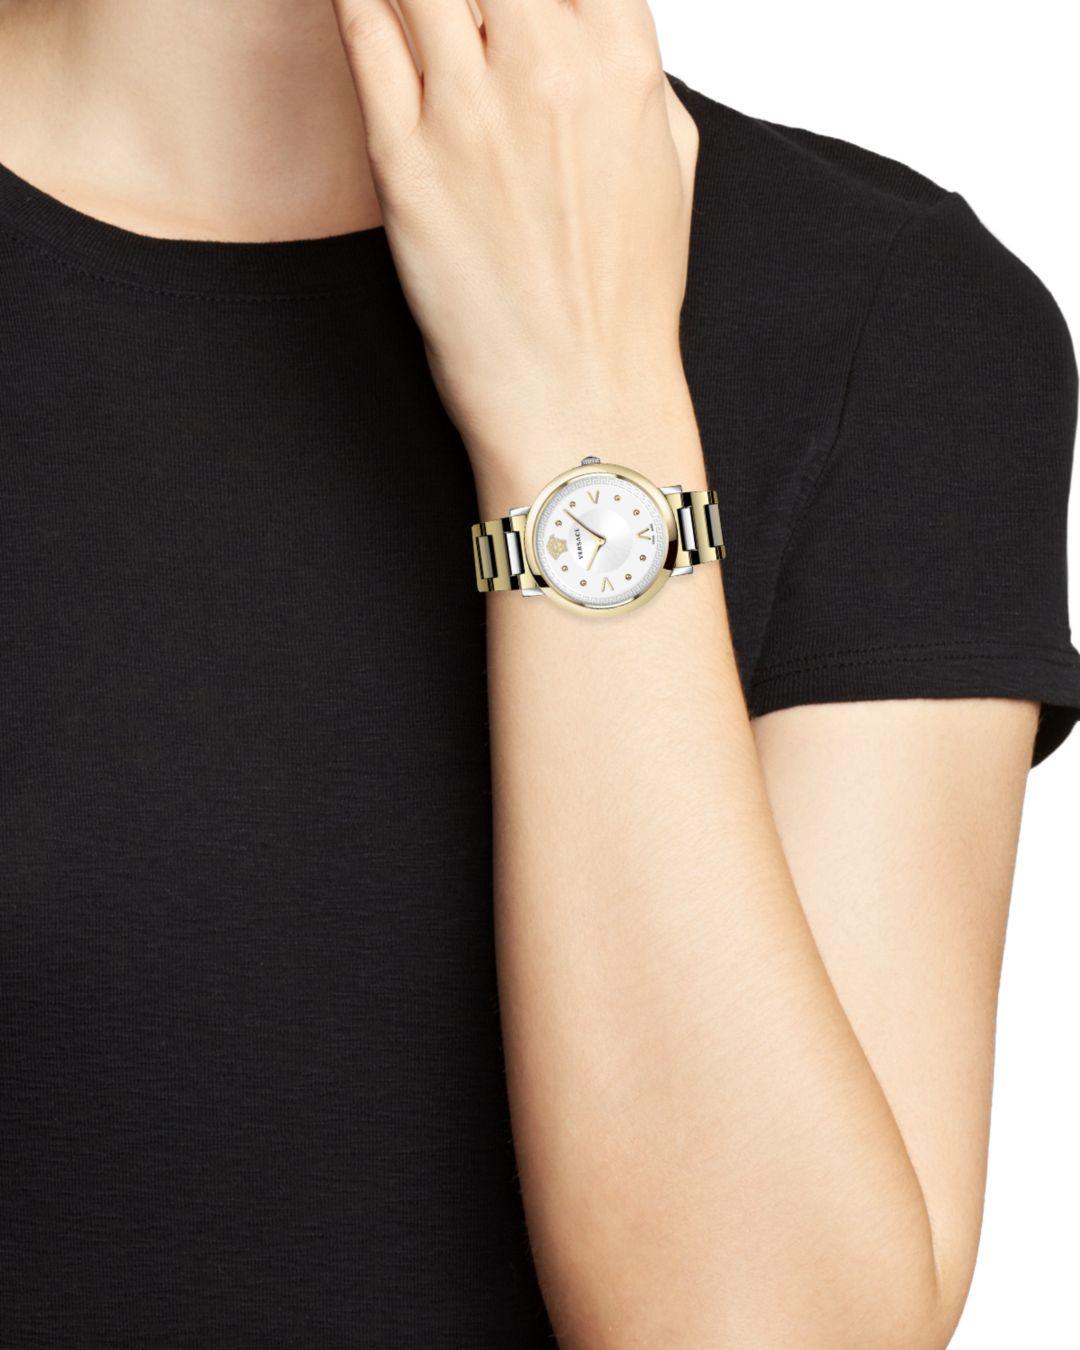 Versace Pop Chic Lady Watch in White/Gold (Metallic) | Lyst